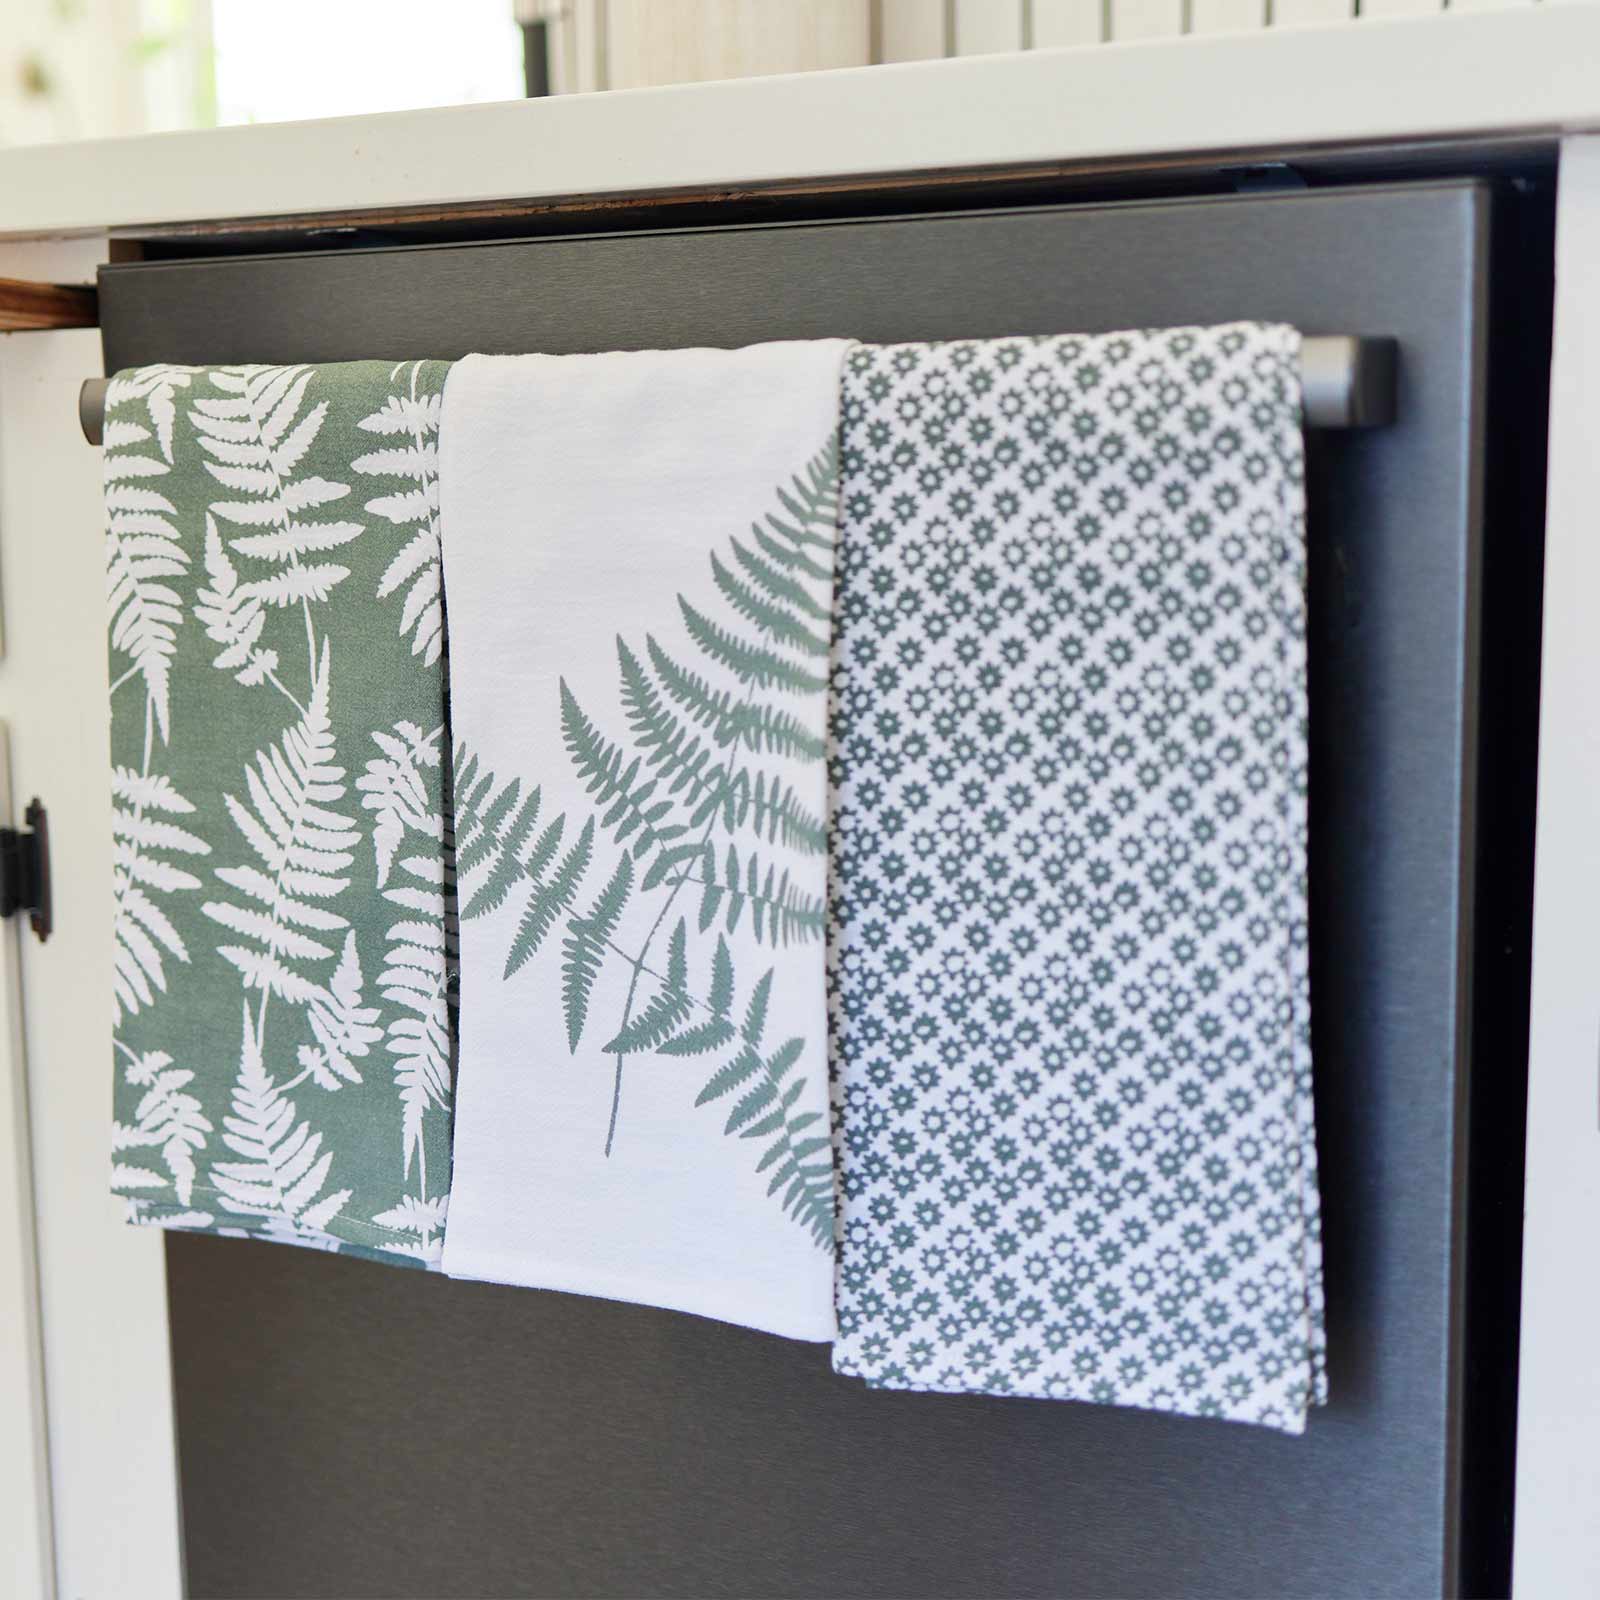 Ferns Green Cotton Kitchen Towels Set Of 3 Kitchen Towel - rockflowerpaper